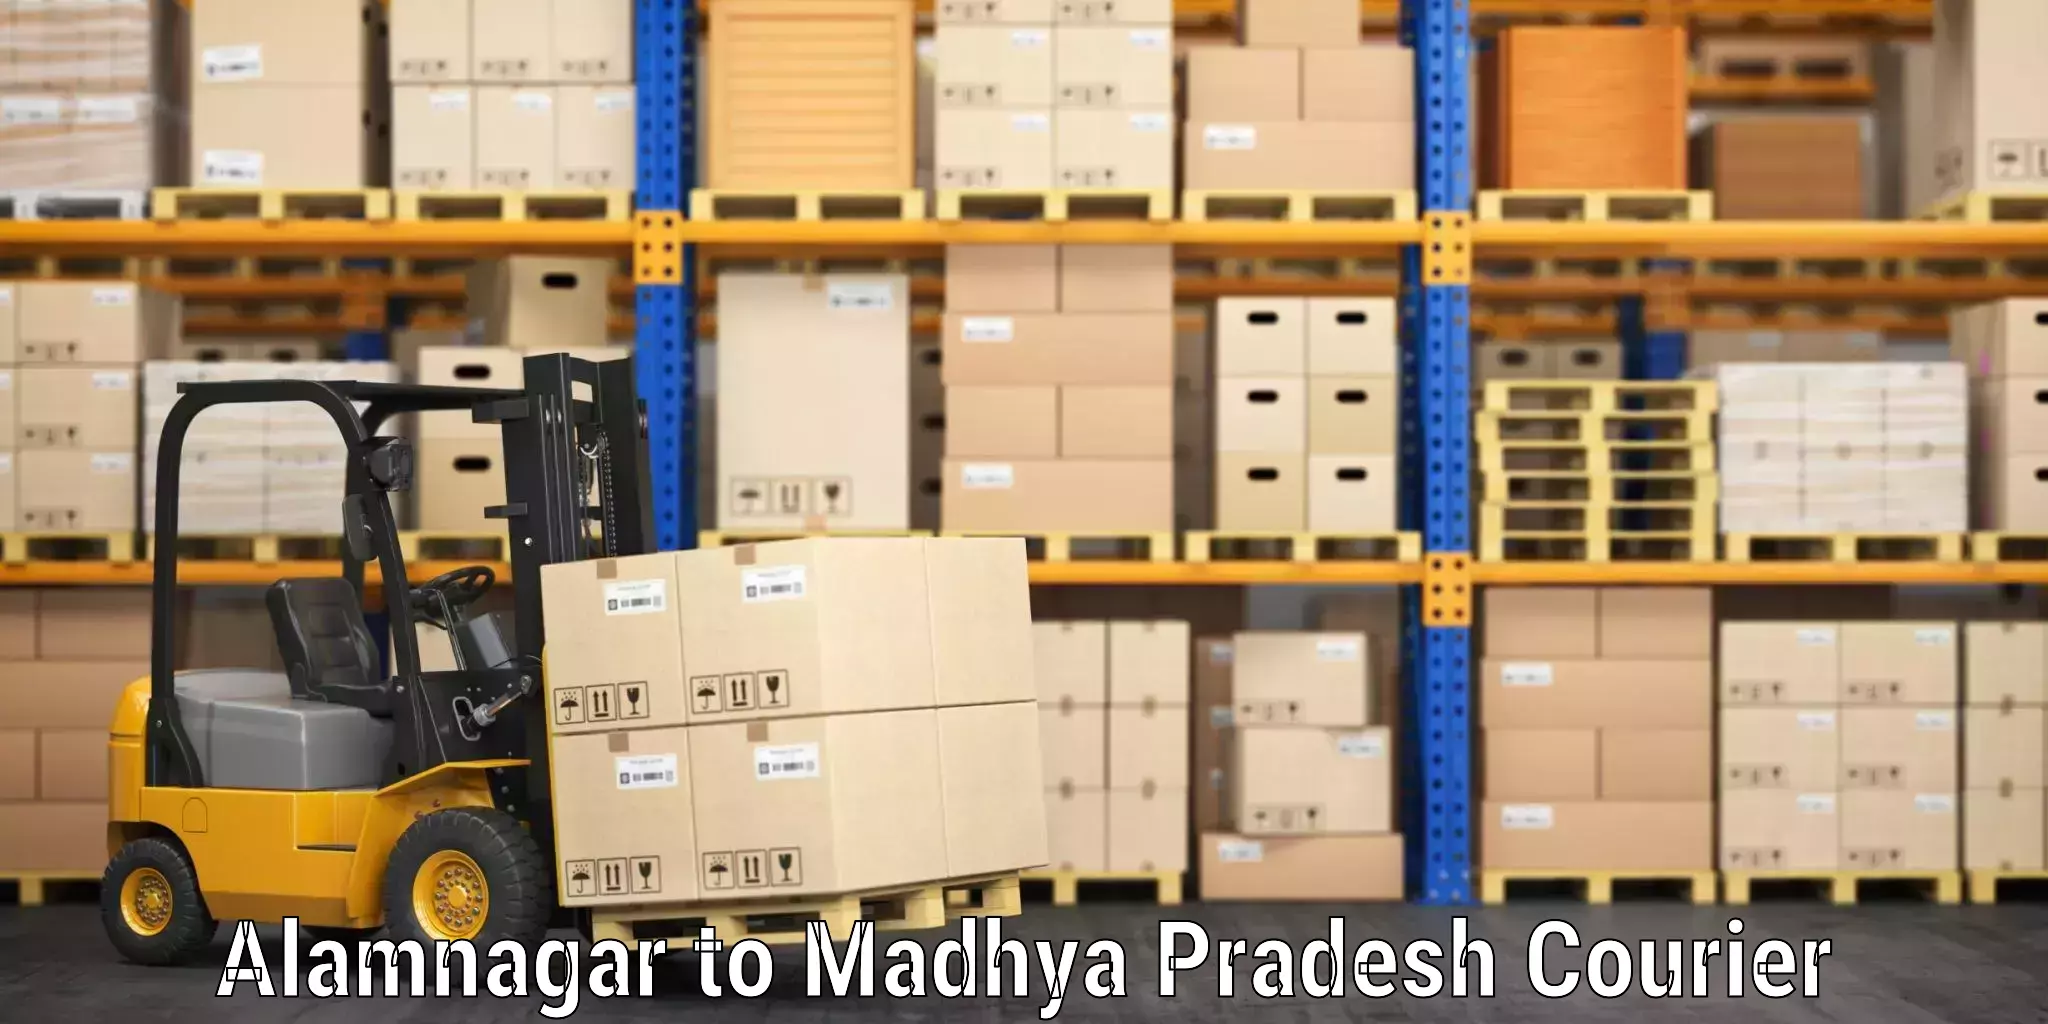 Instant baggage transport quote Alamnagar to Madhya Pradesh